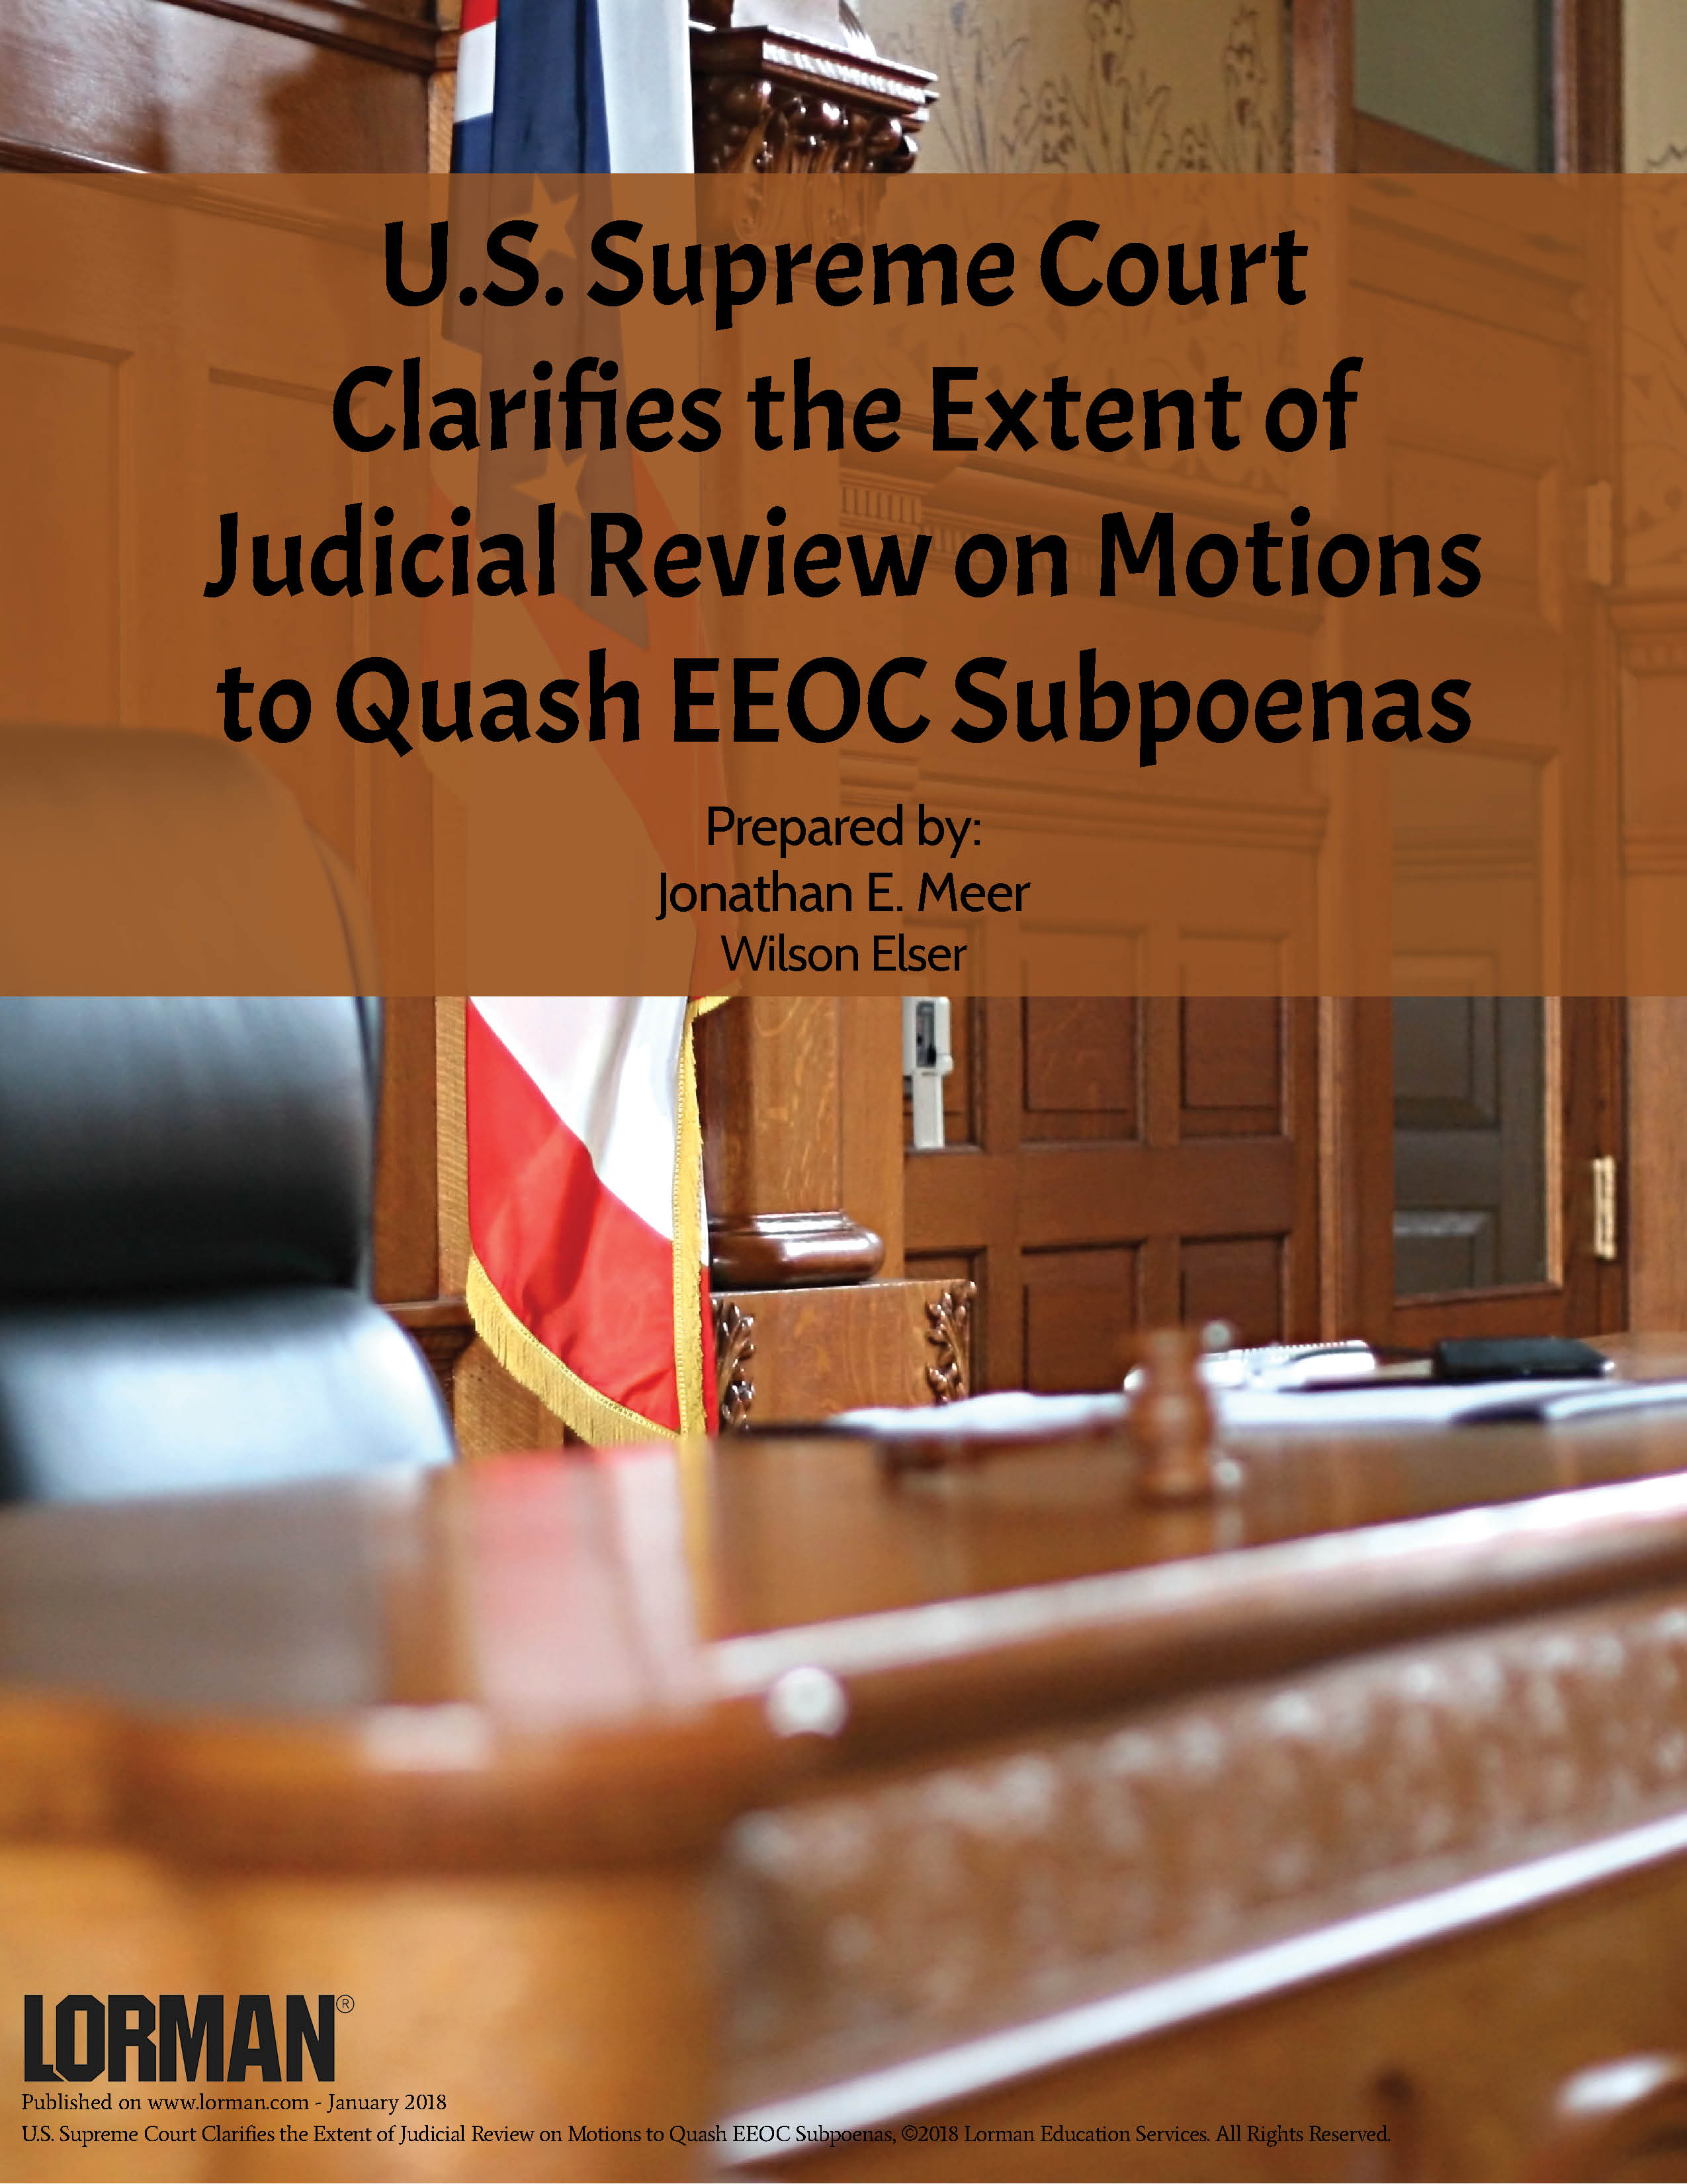 U.S. Supreme Court Clarifies the Extent of Judicial Review on Motions to Quash EEOC Subpoenas